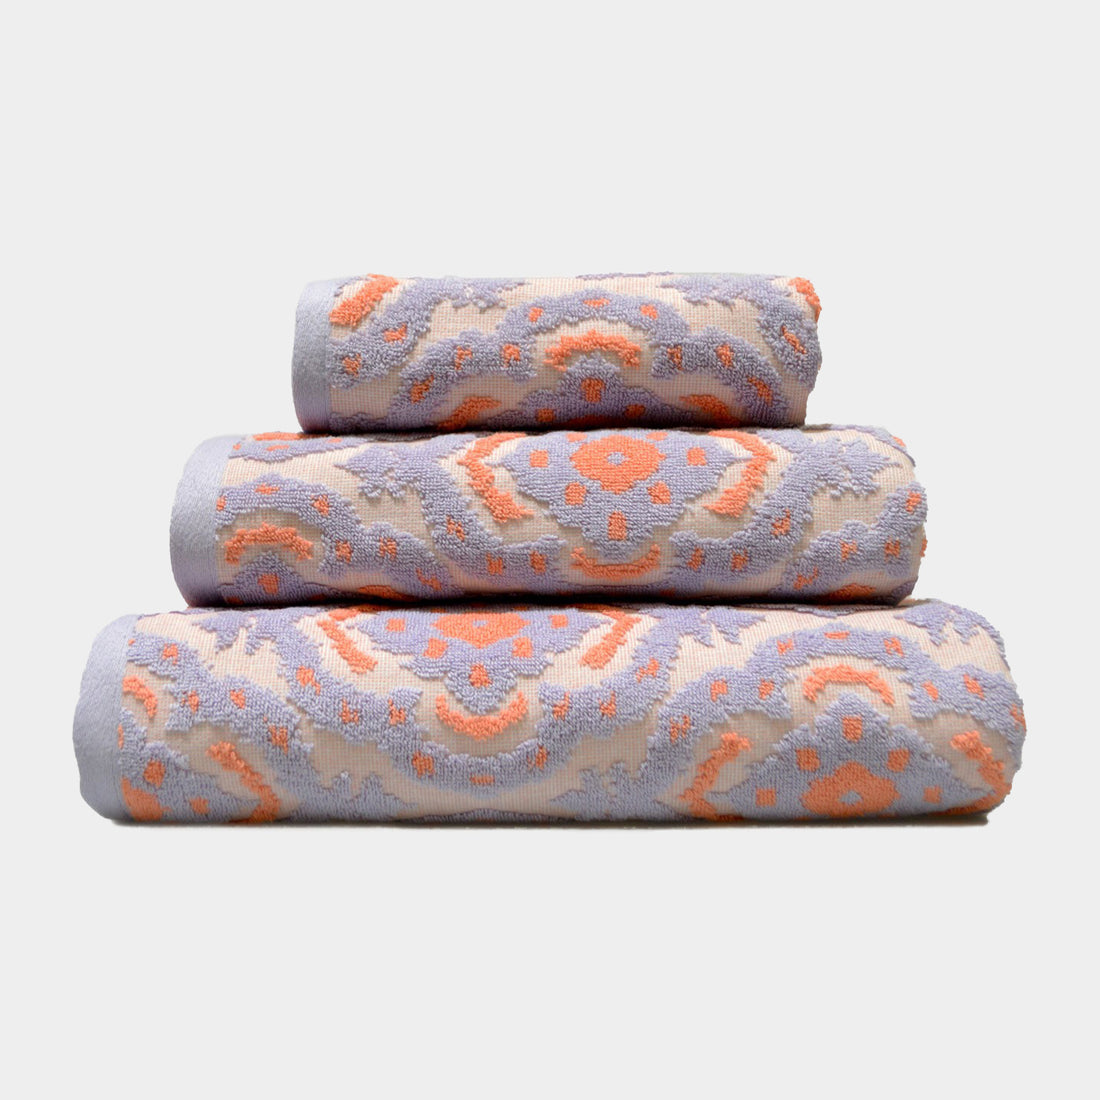 Goa Sculpted Towels, colourful lilac and apricot bath towel set